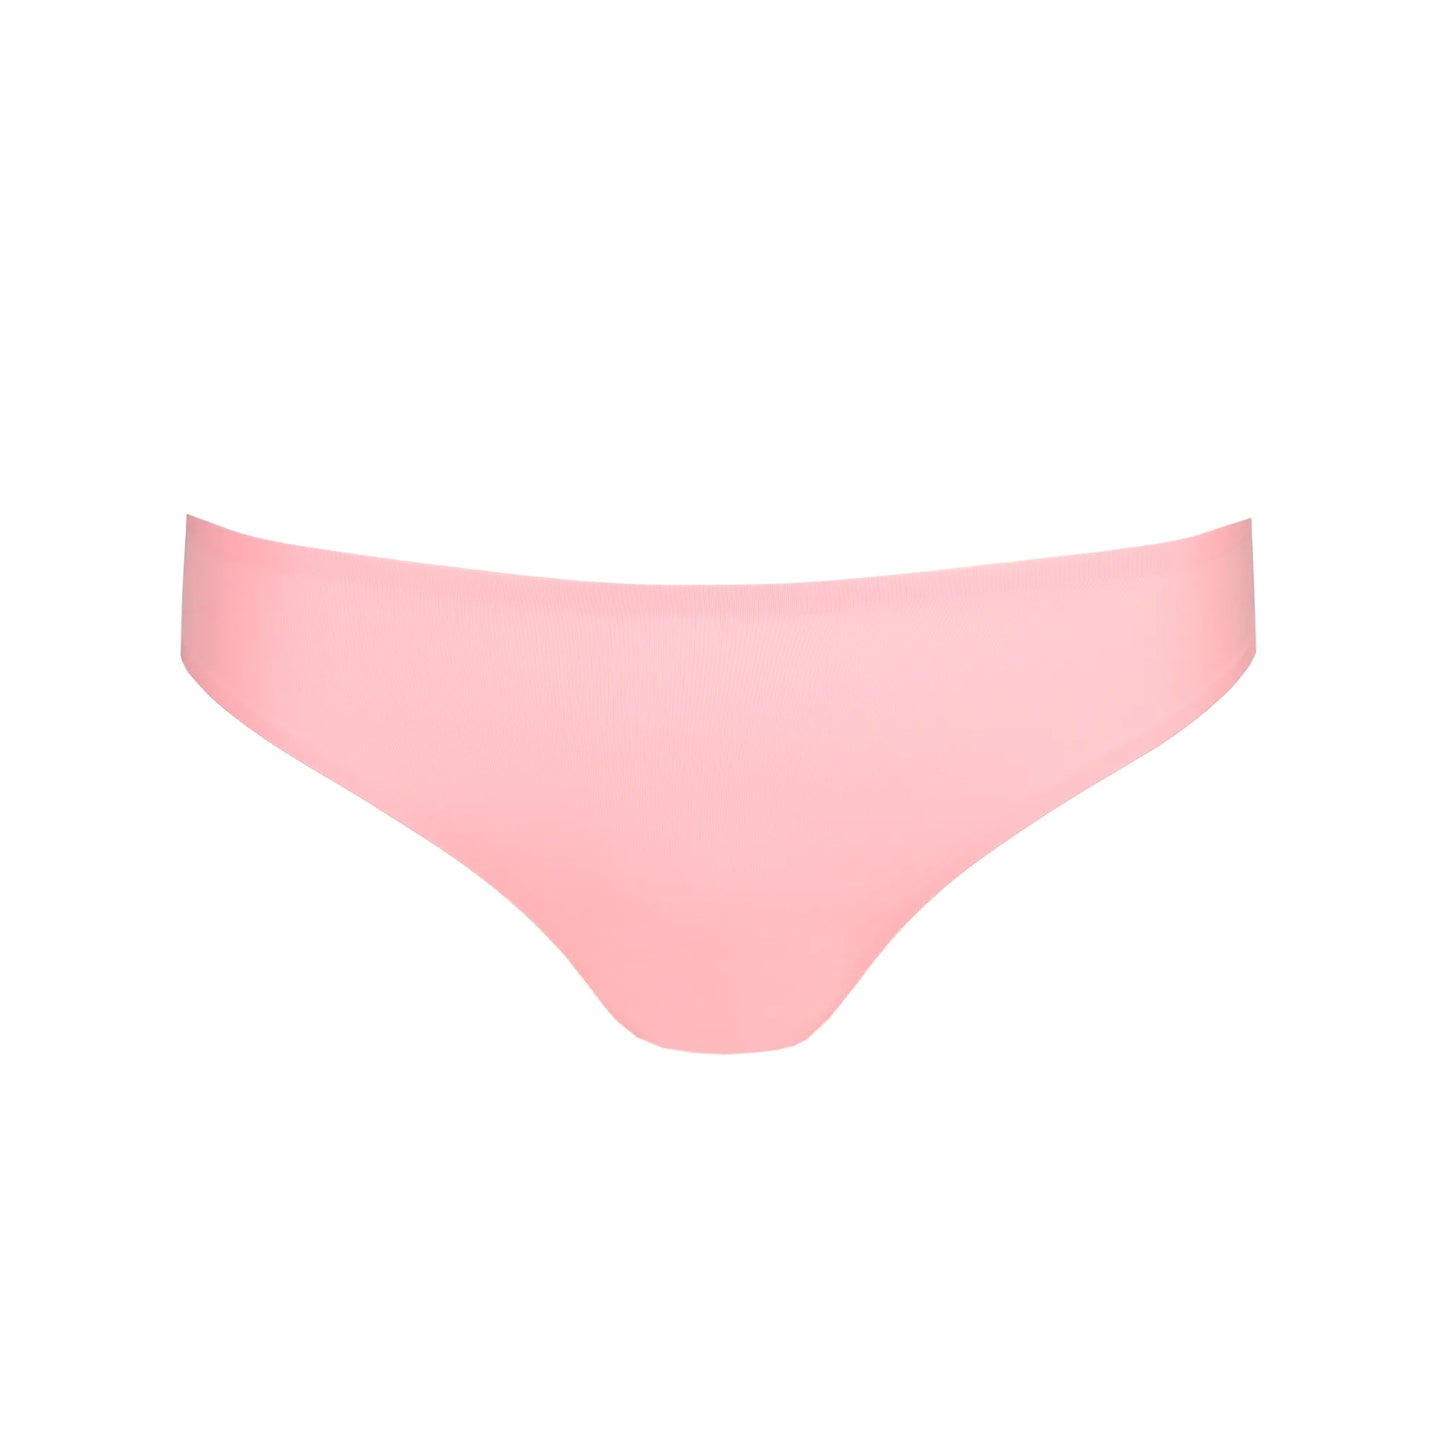 Colour Studio Rio Brief - Pink Parfait